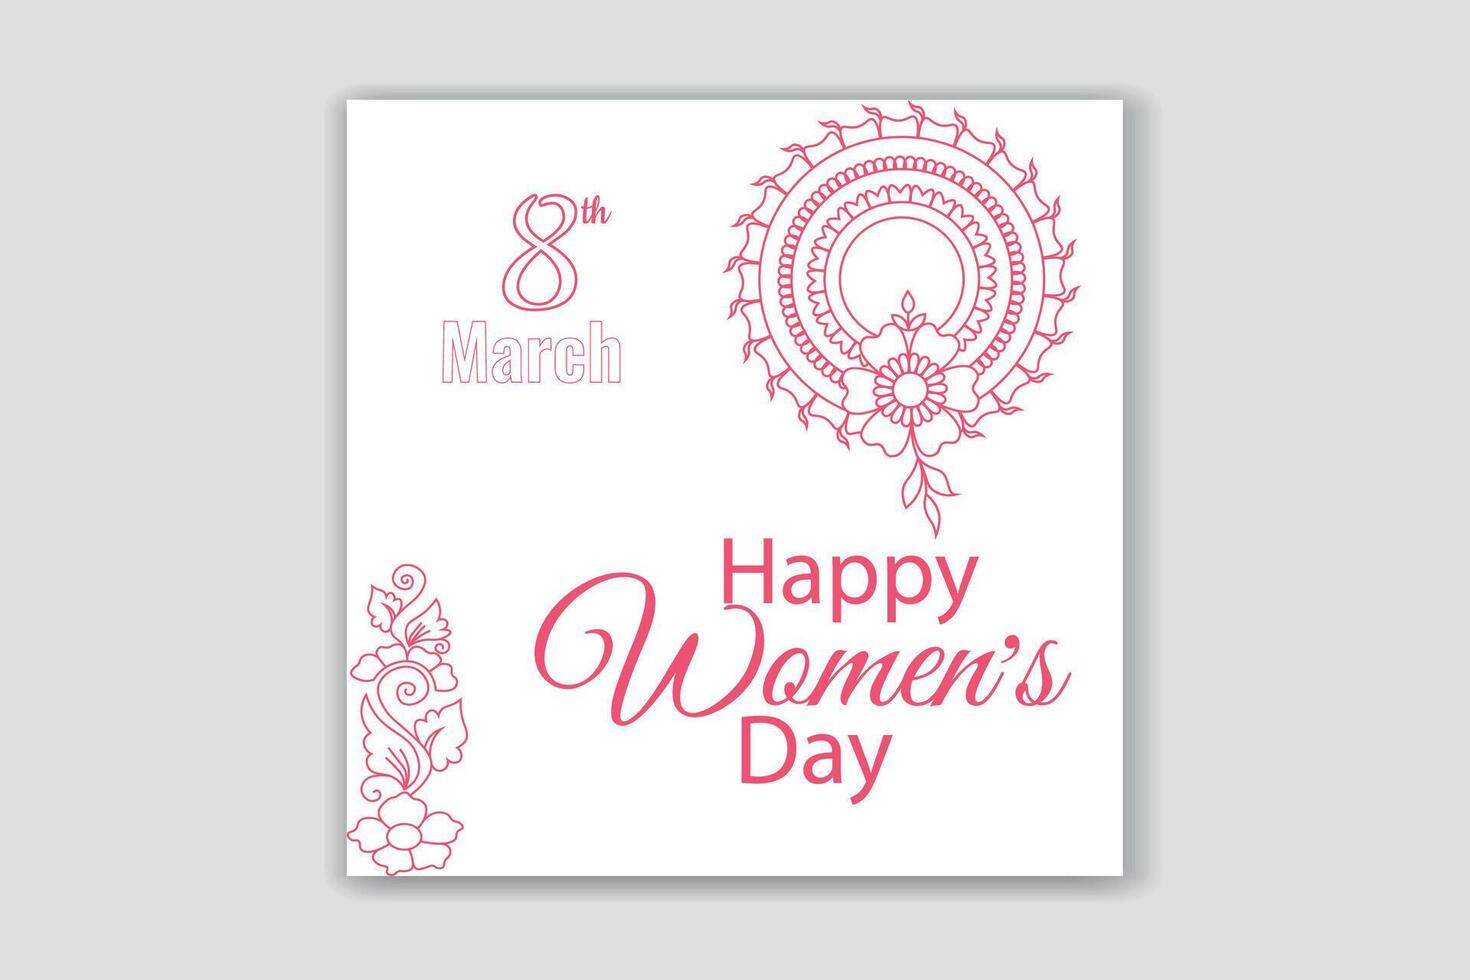 happy women's day social media banner design vector